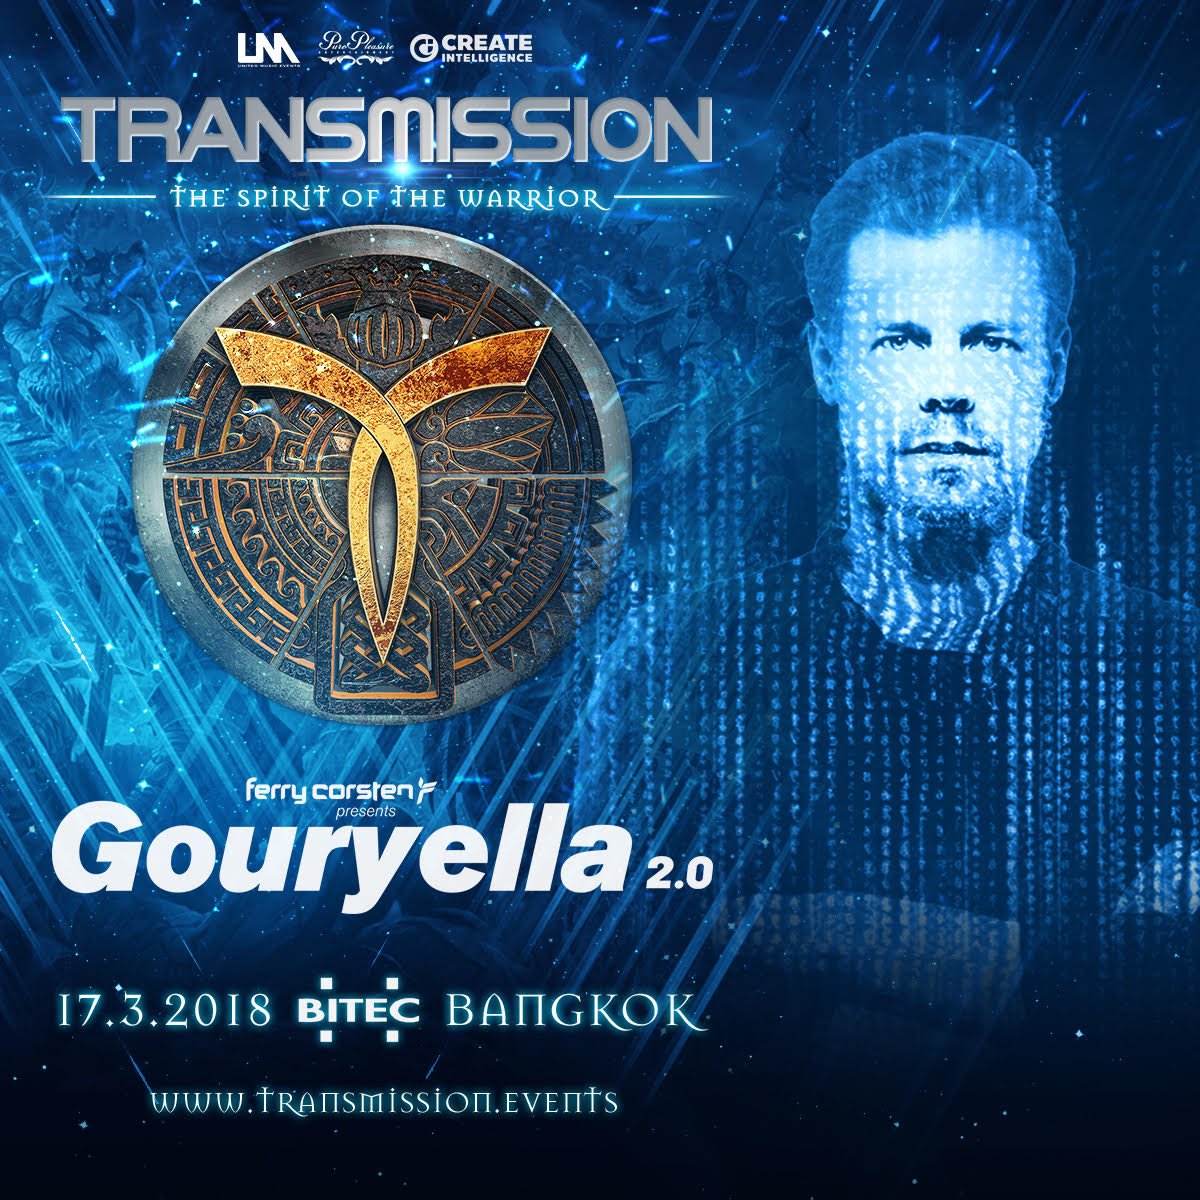 Transmission Asia 2018 